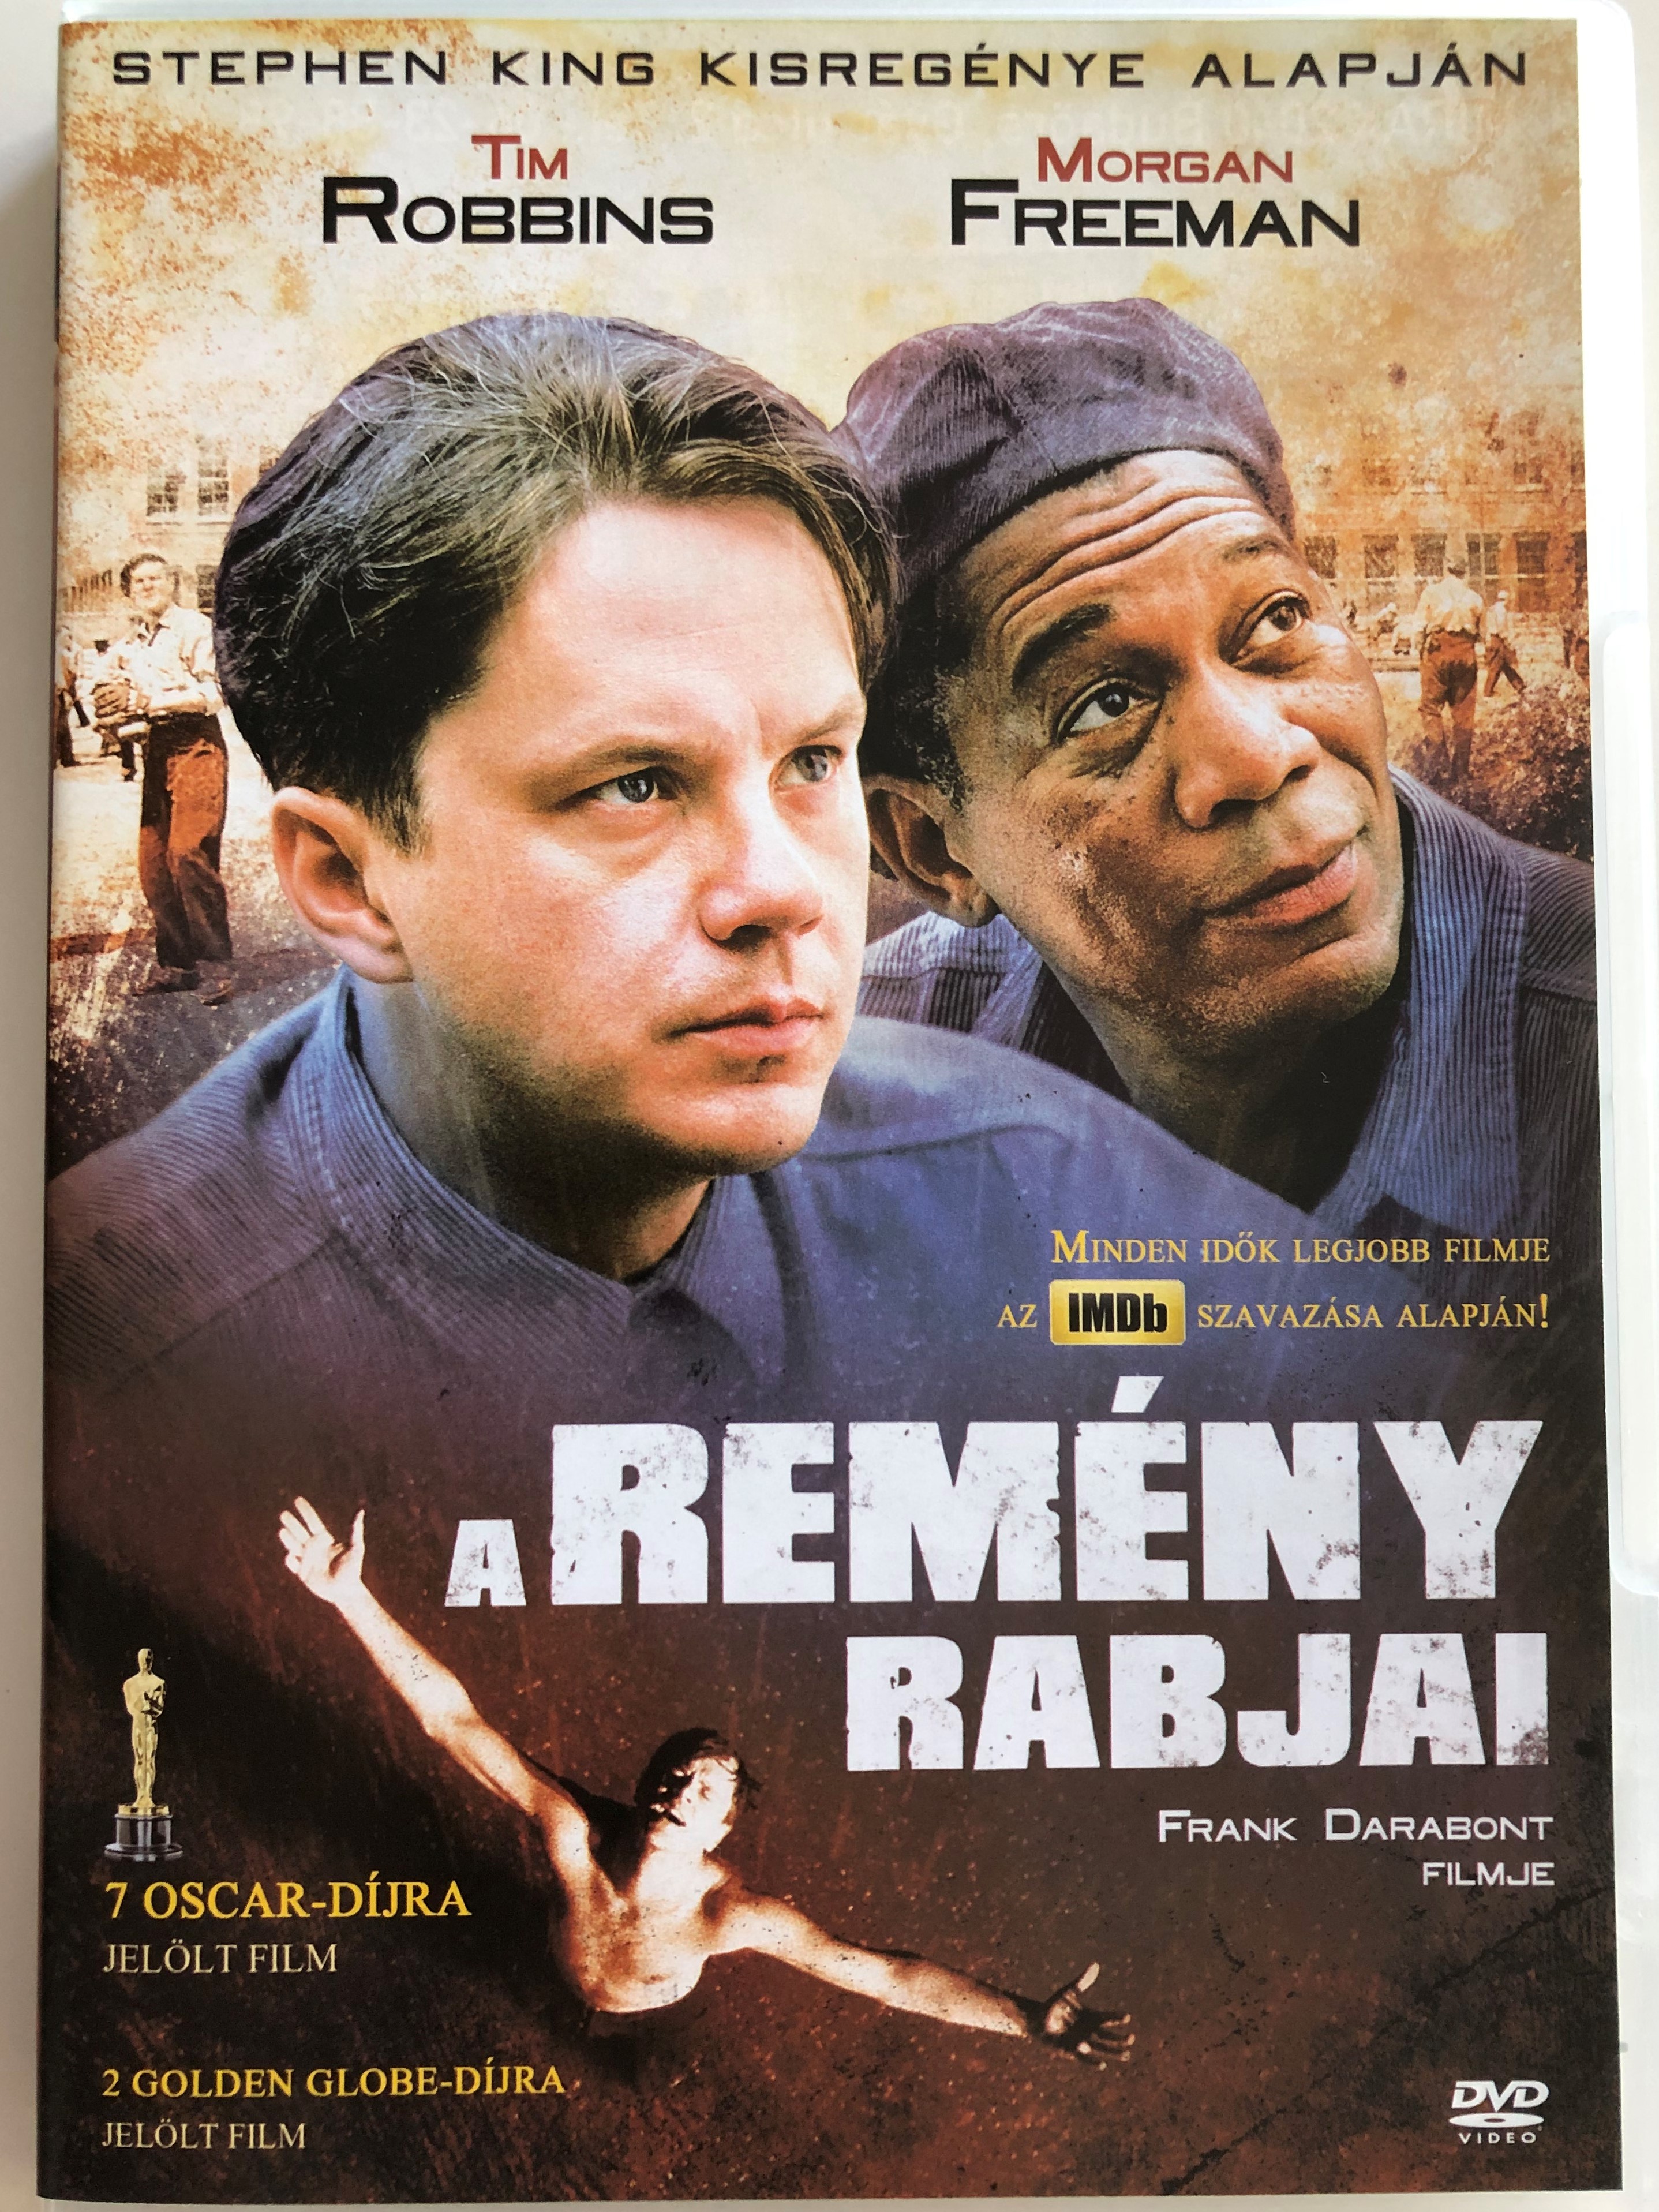 the-shawshank-redemption-dvd-1994-a-rem-ny-rabjai-directed-by-frank-darabont-starring-tim-robbins-morgan-freeman-bob-gunton-william-sadler-1-.jpg